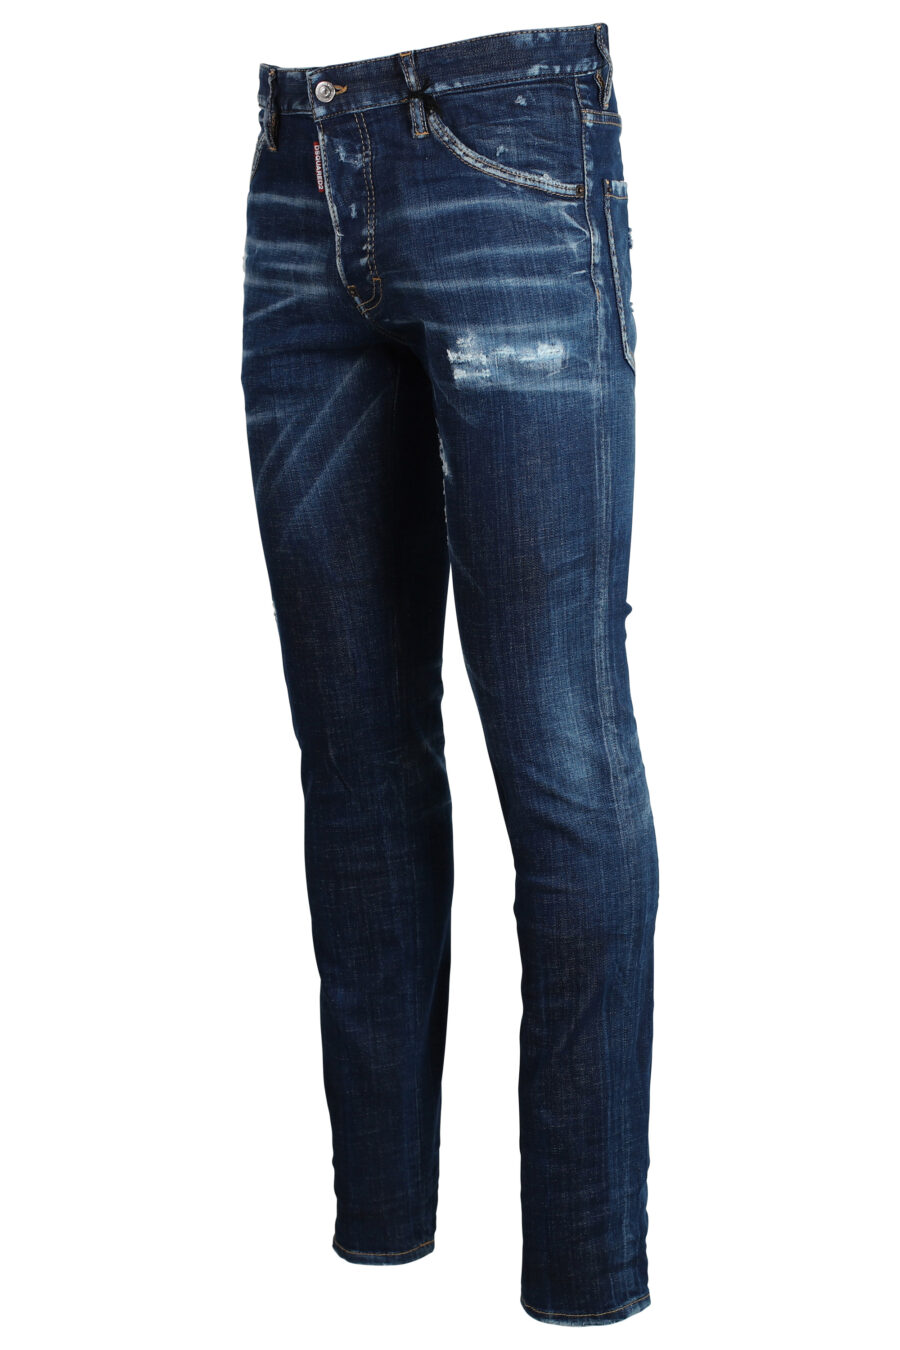 Icon cool guy" jeans dark blue semi-worn - 8052134643259 2